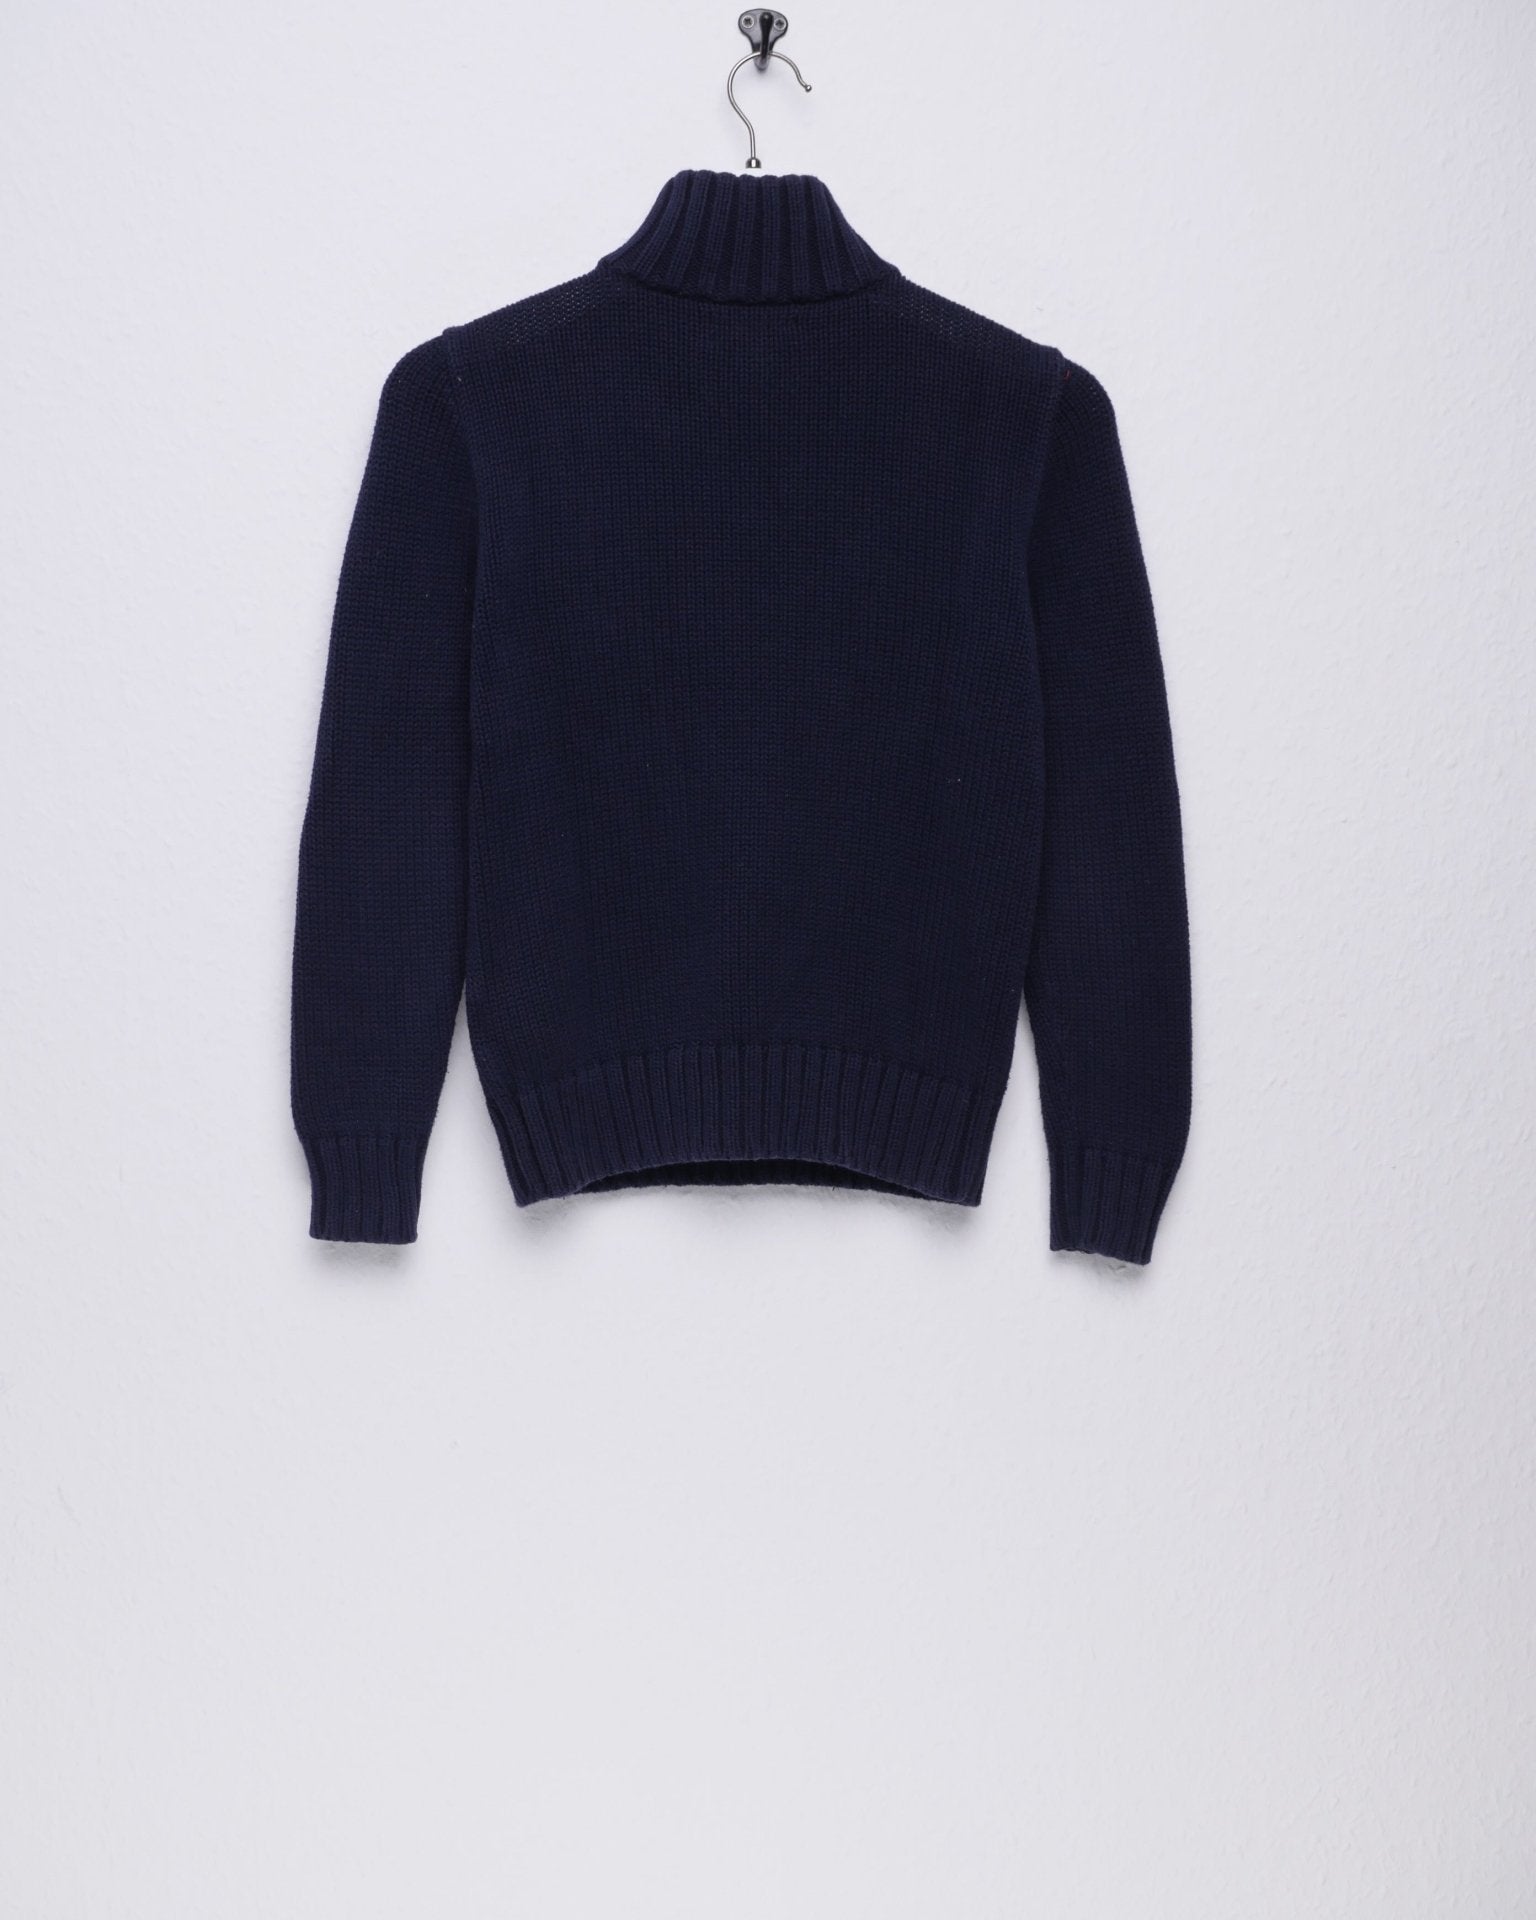 ralph lauren knitted half zipped dark blue turtle neck Sweater - Peeces